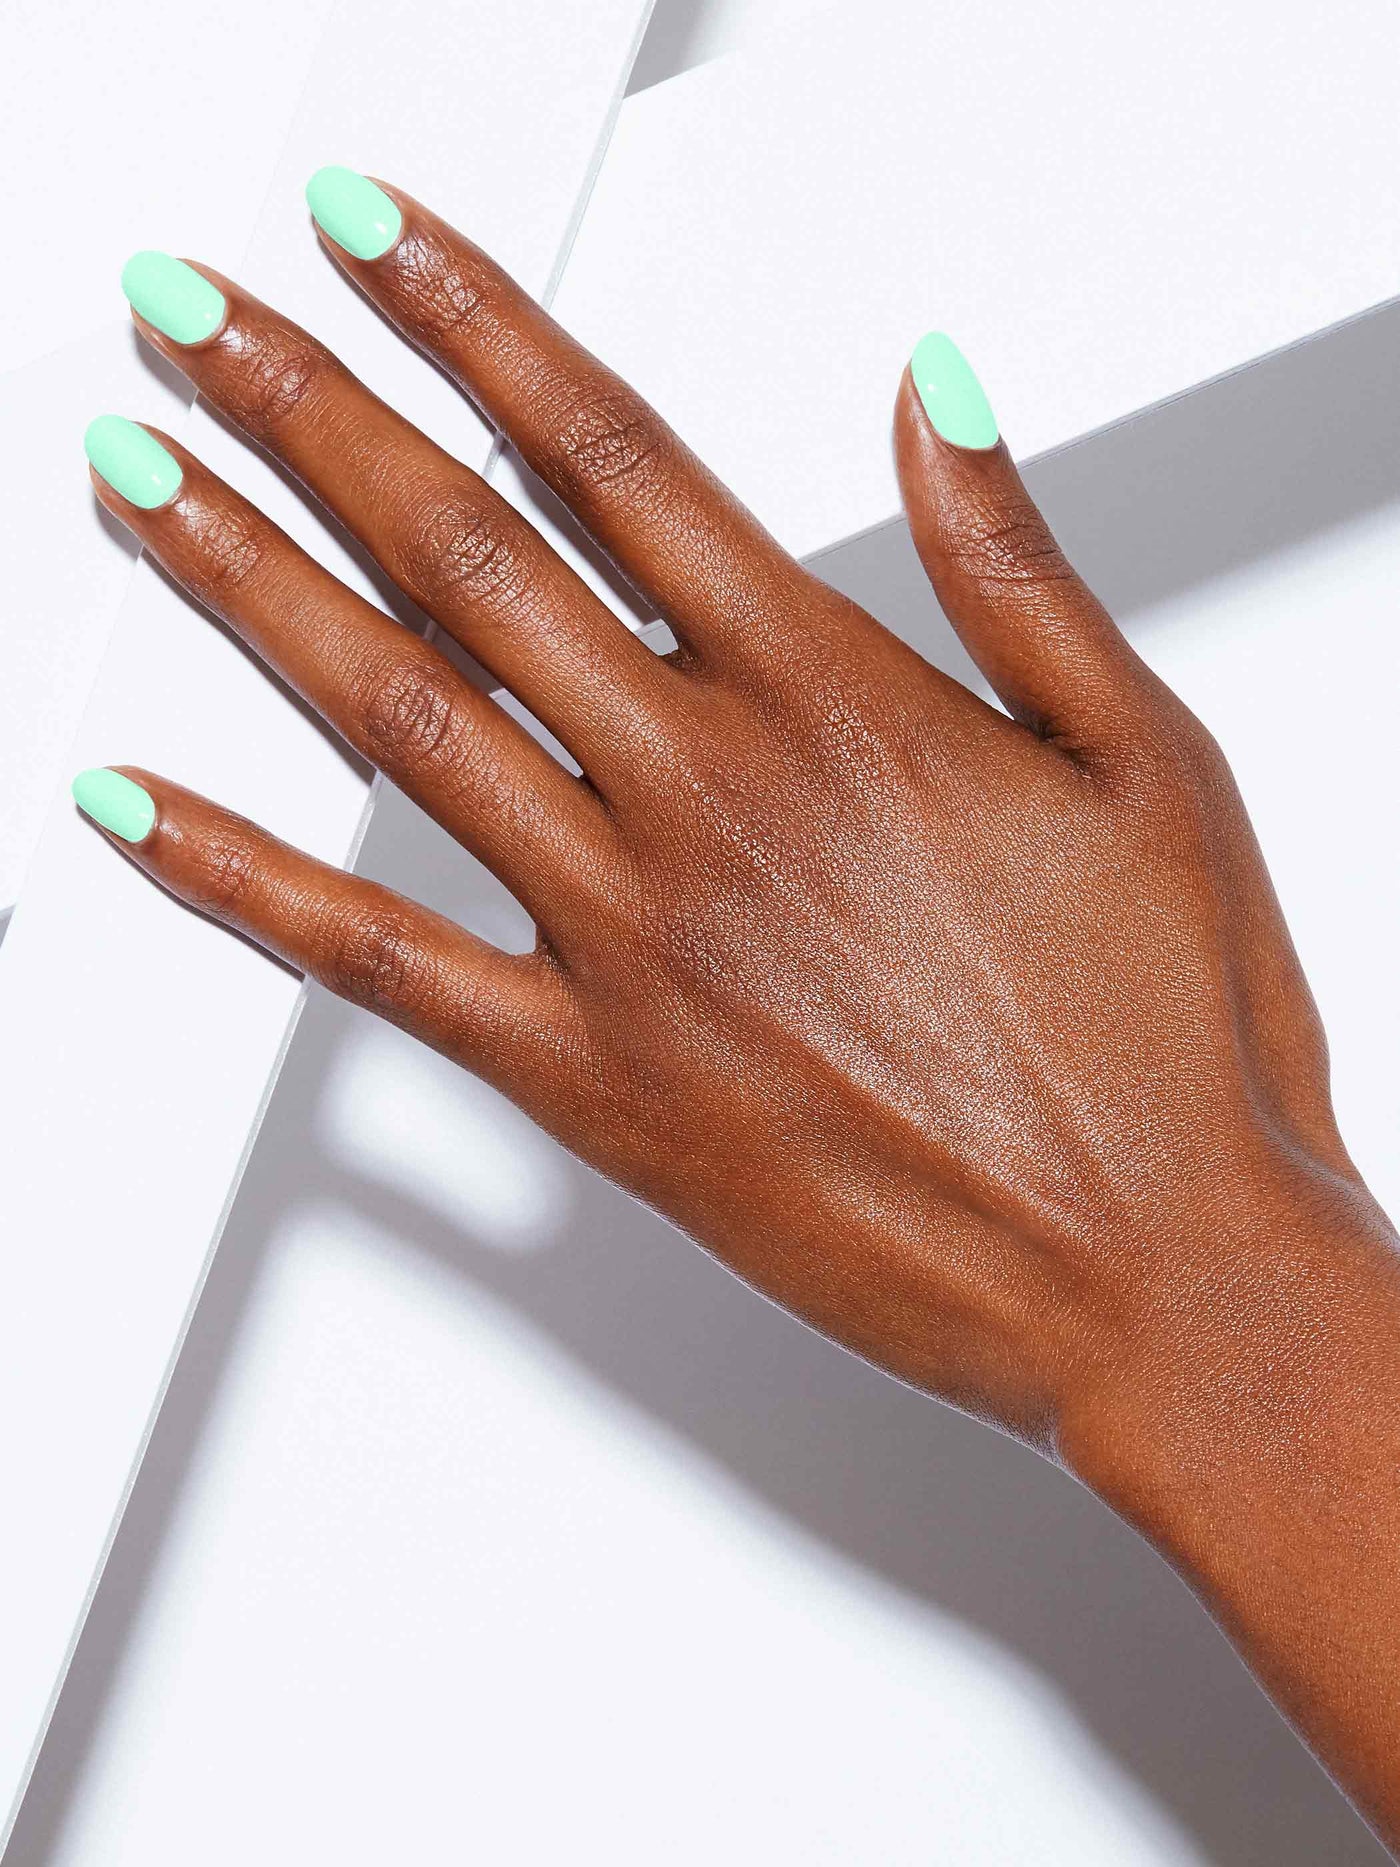 Neon pastel green full-coverage nail polish, Rich